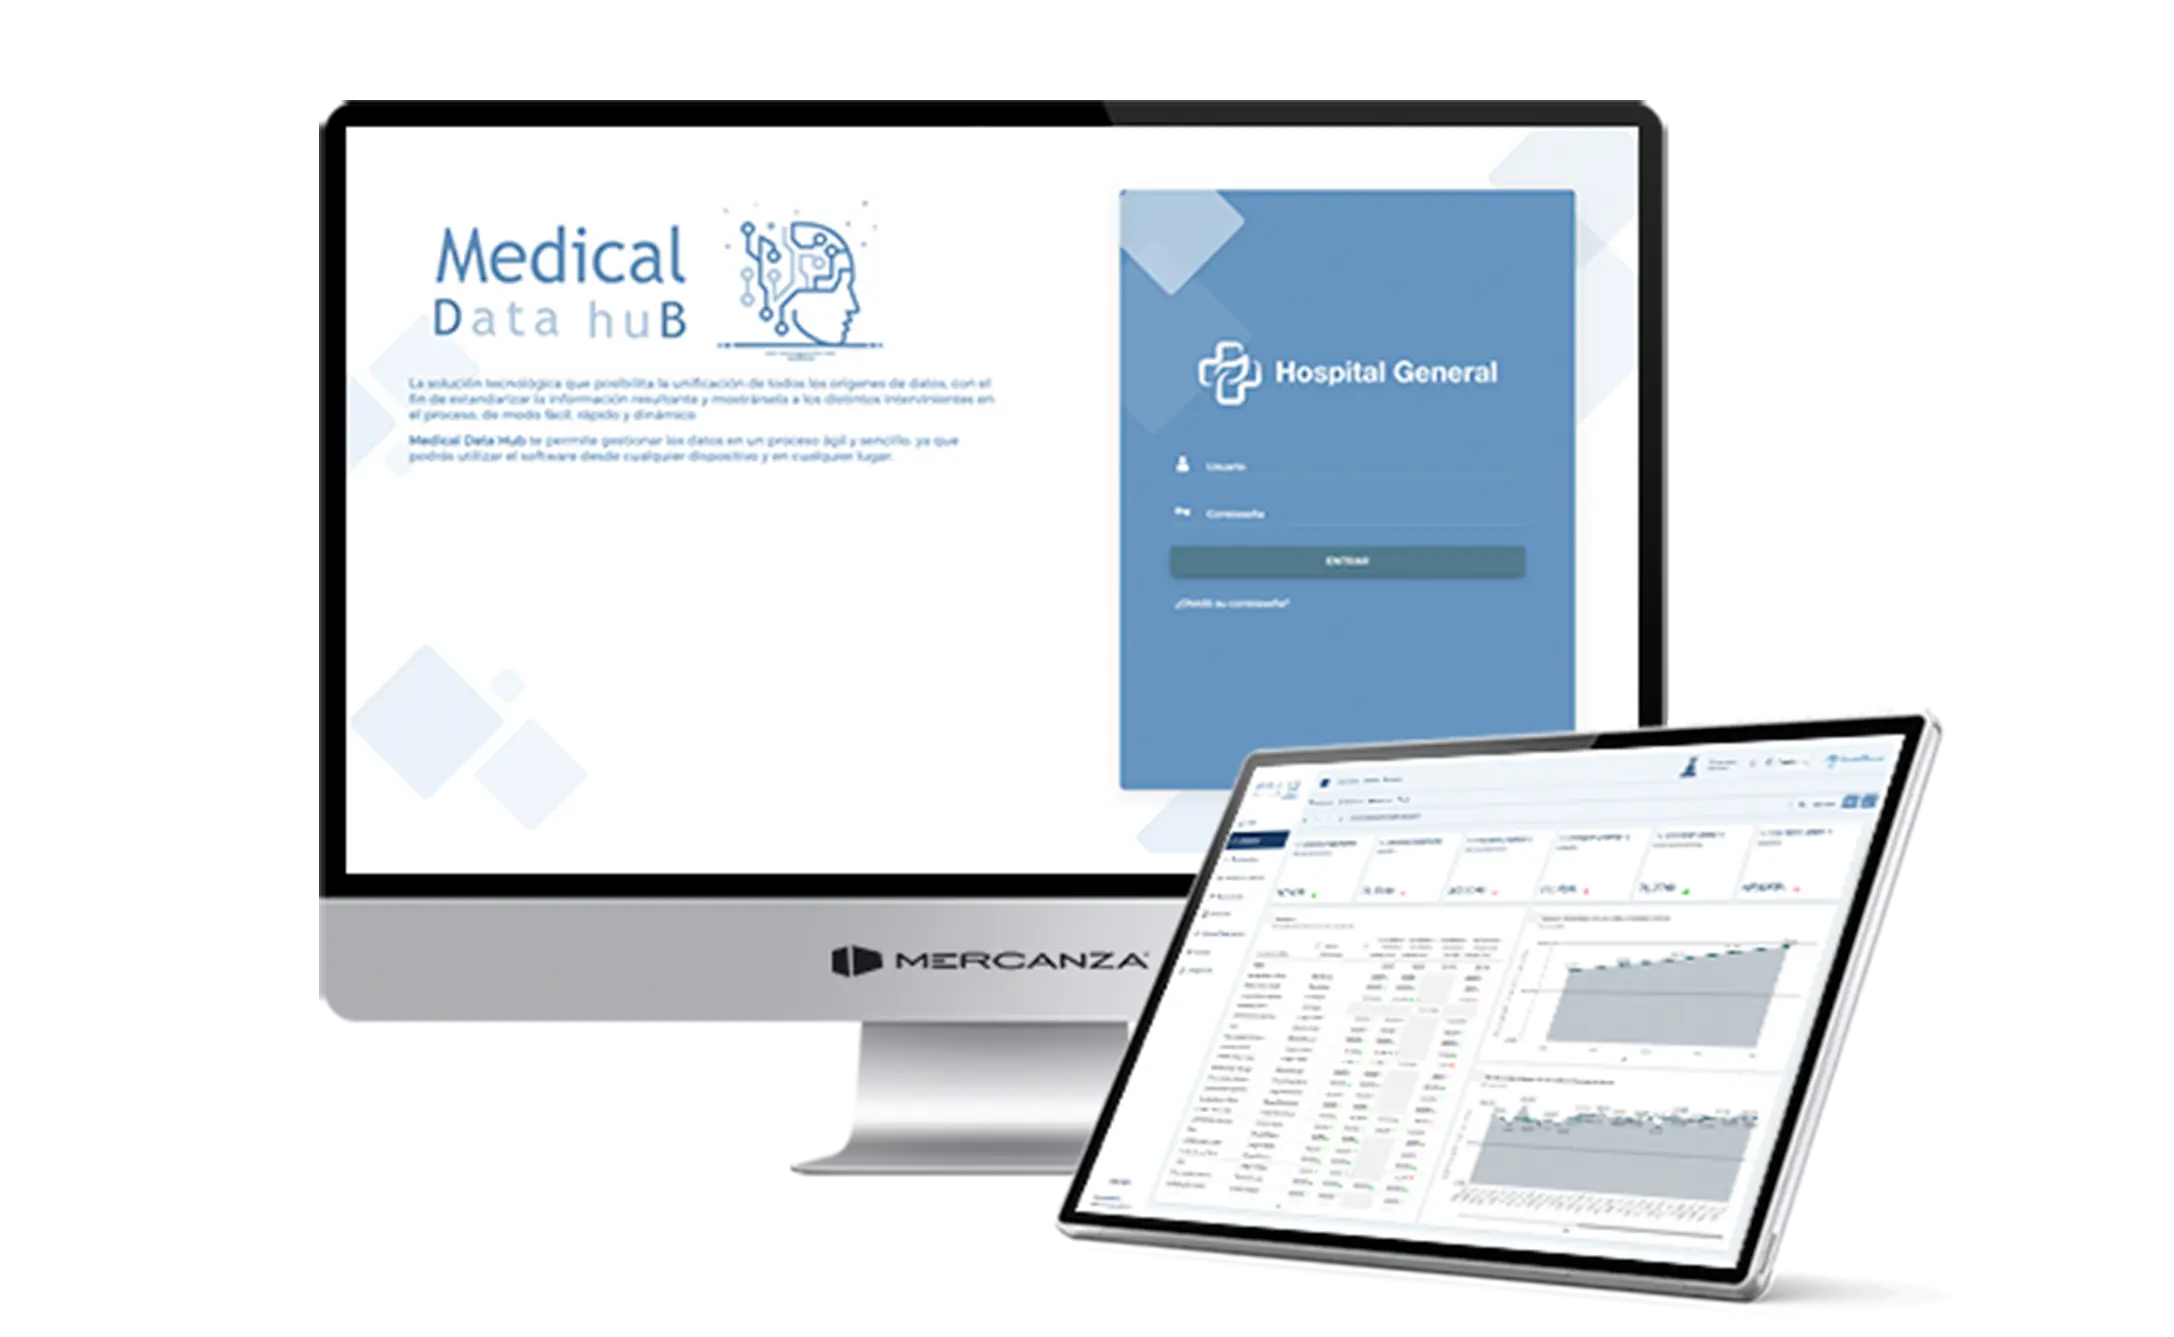 Medical Data Hub